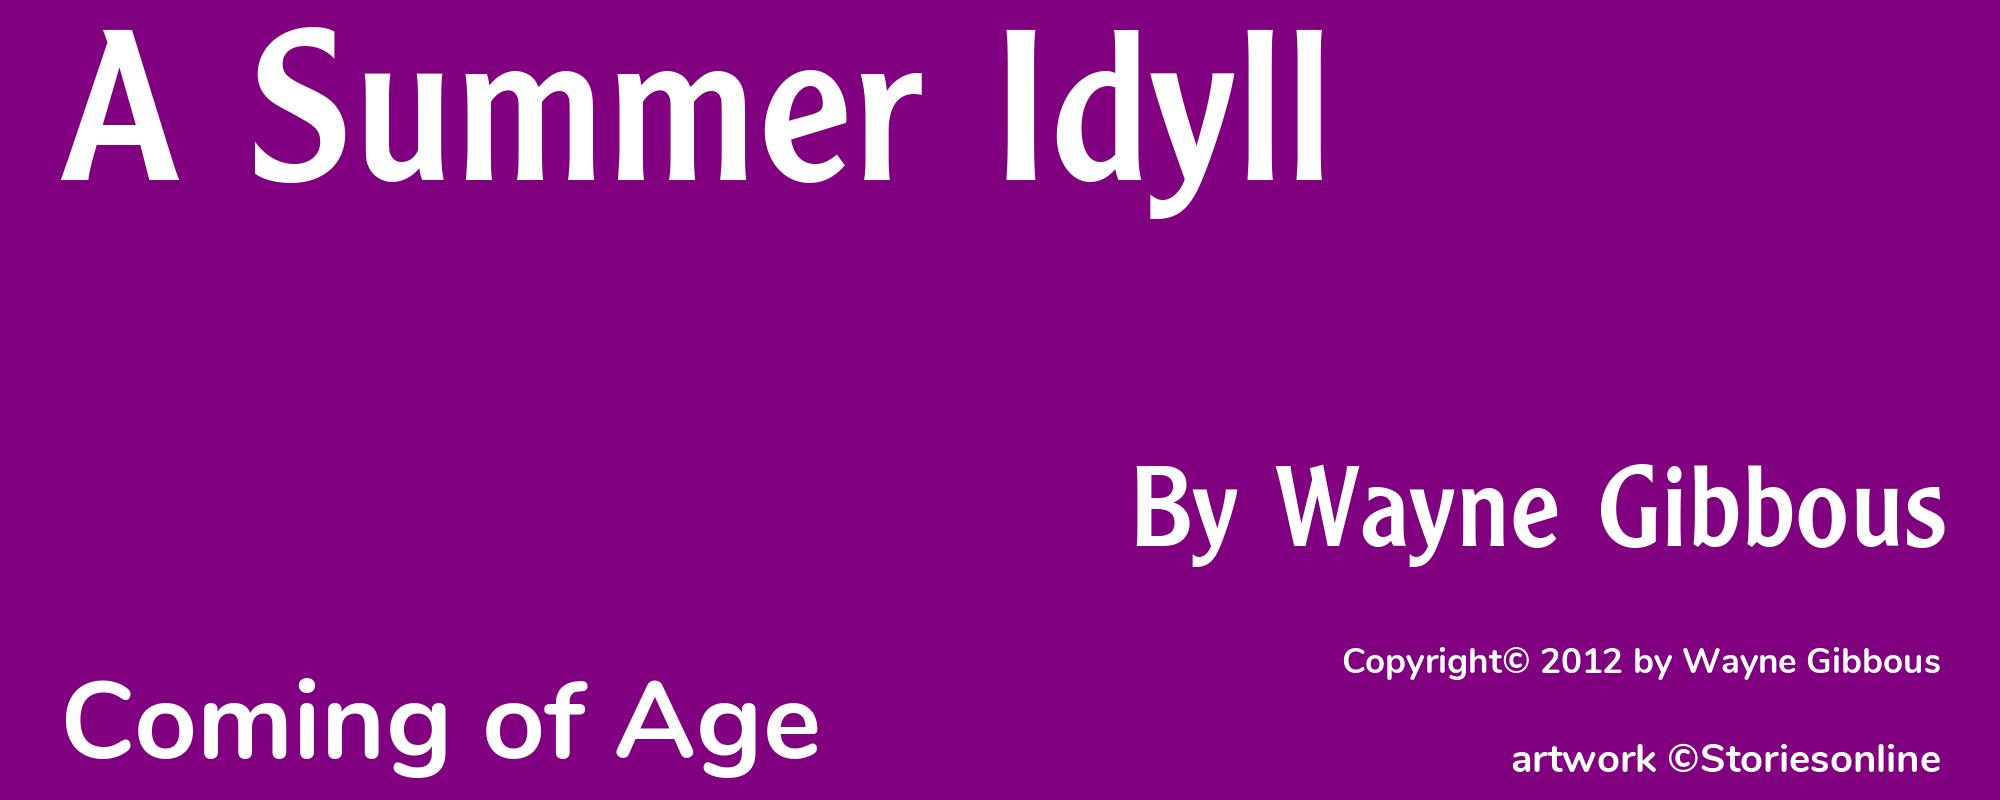 A Summer Idyll - Cover